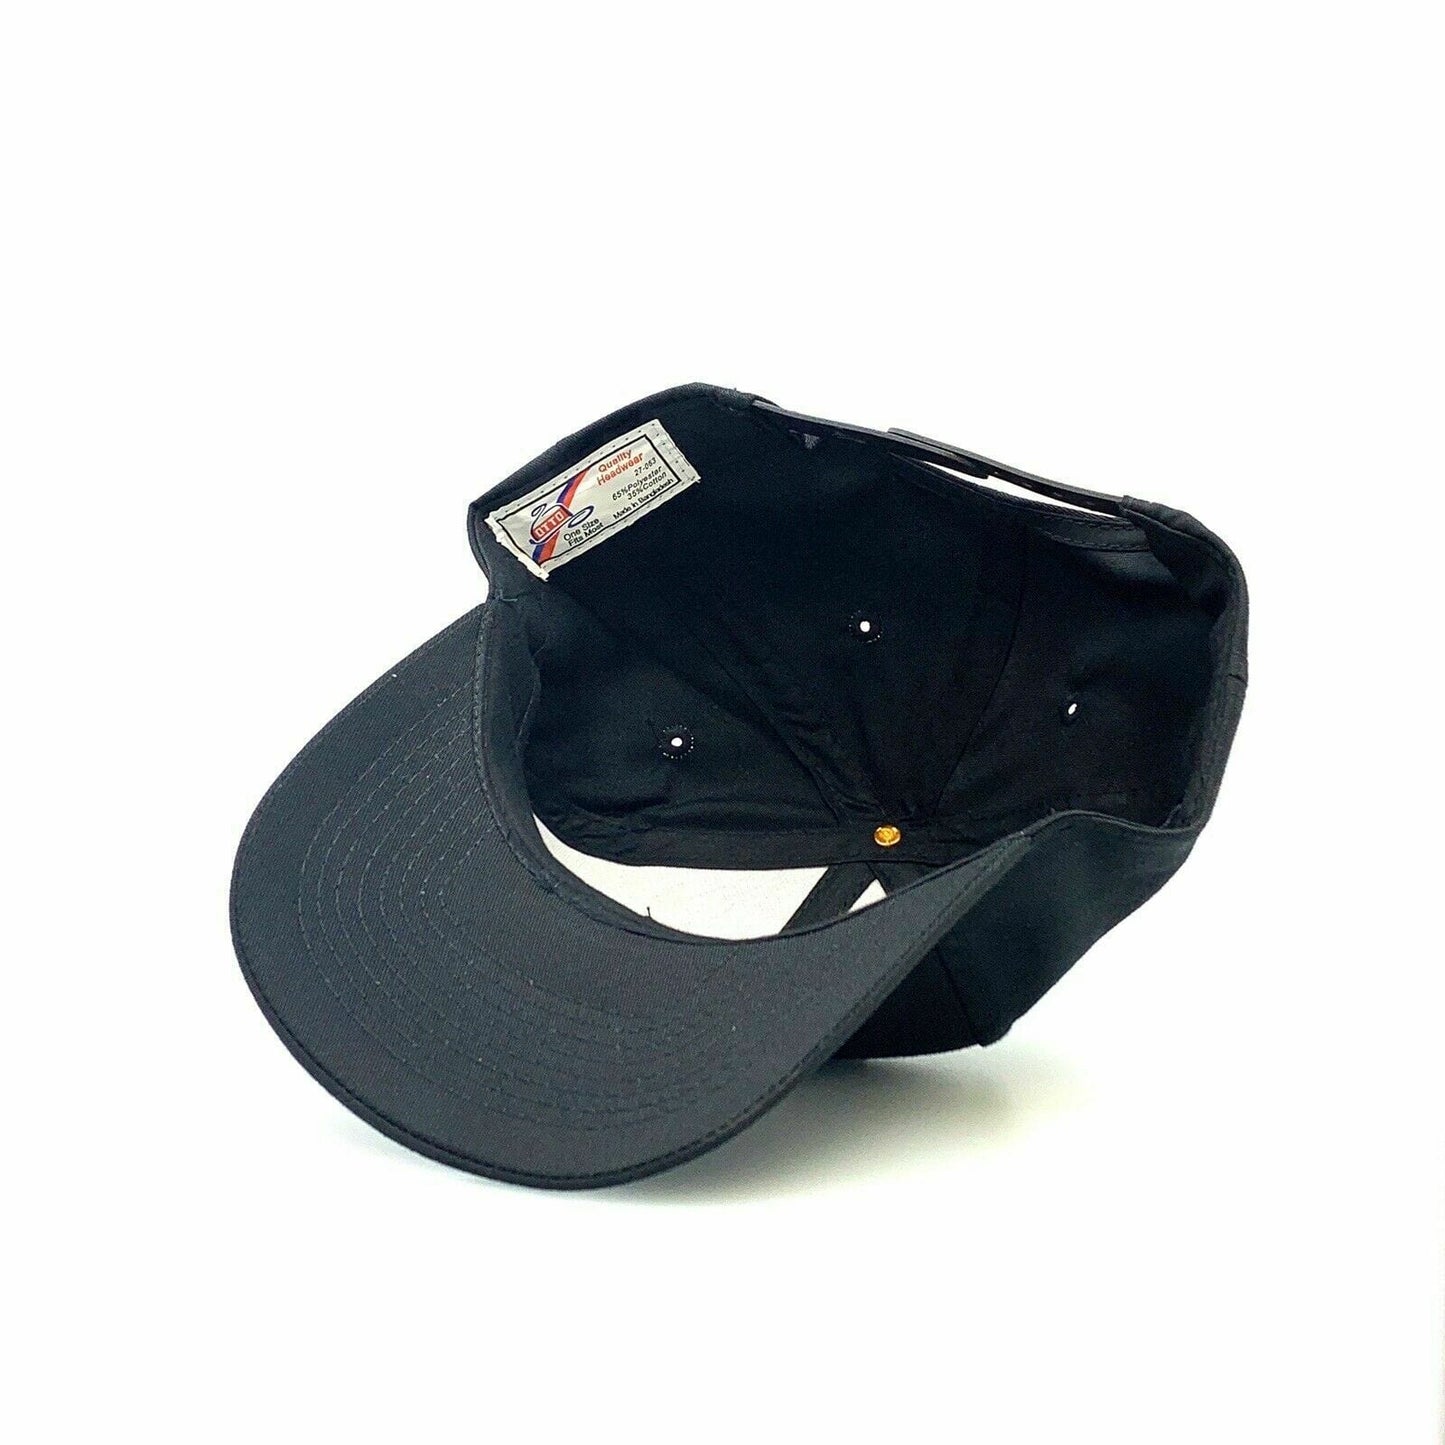 Otto Headwear FOLAND SALES & SERVICE SnapBack Hat, Black - OSFM